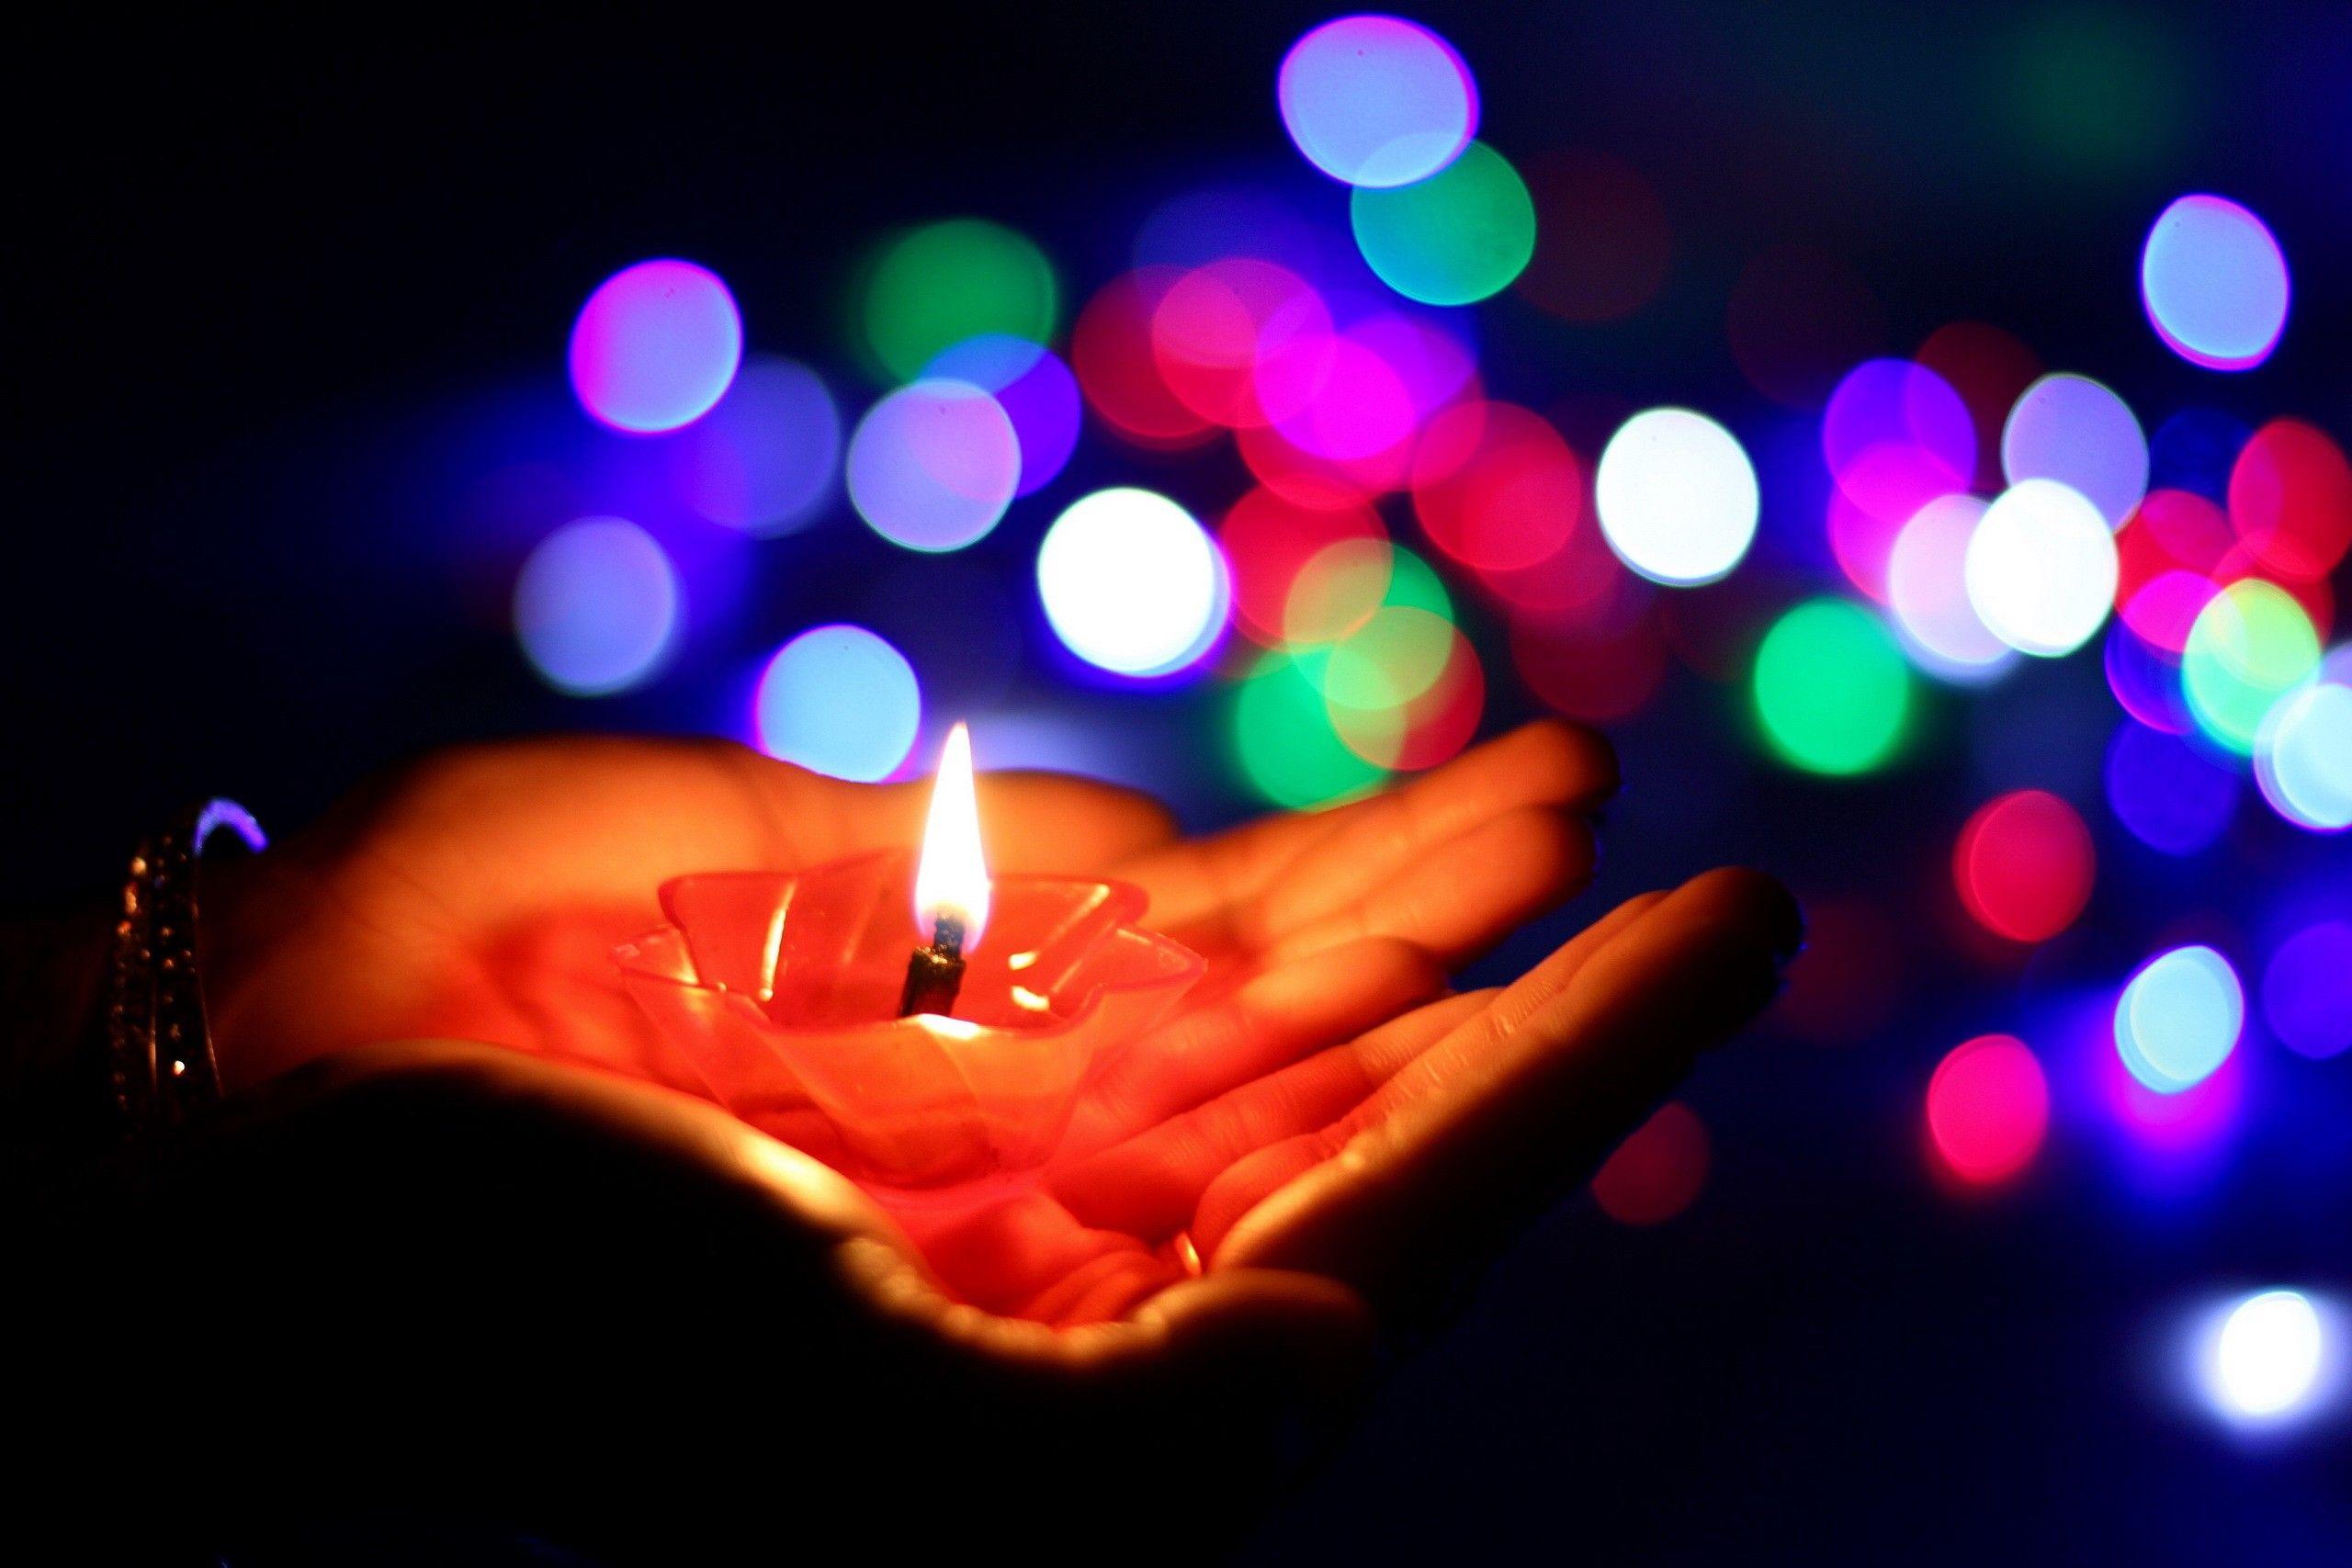 Diwali Night Candles Lights Wallpaper. Diwali photography, Candle light photography, Candle night